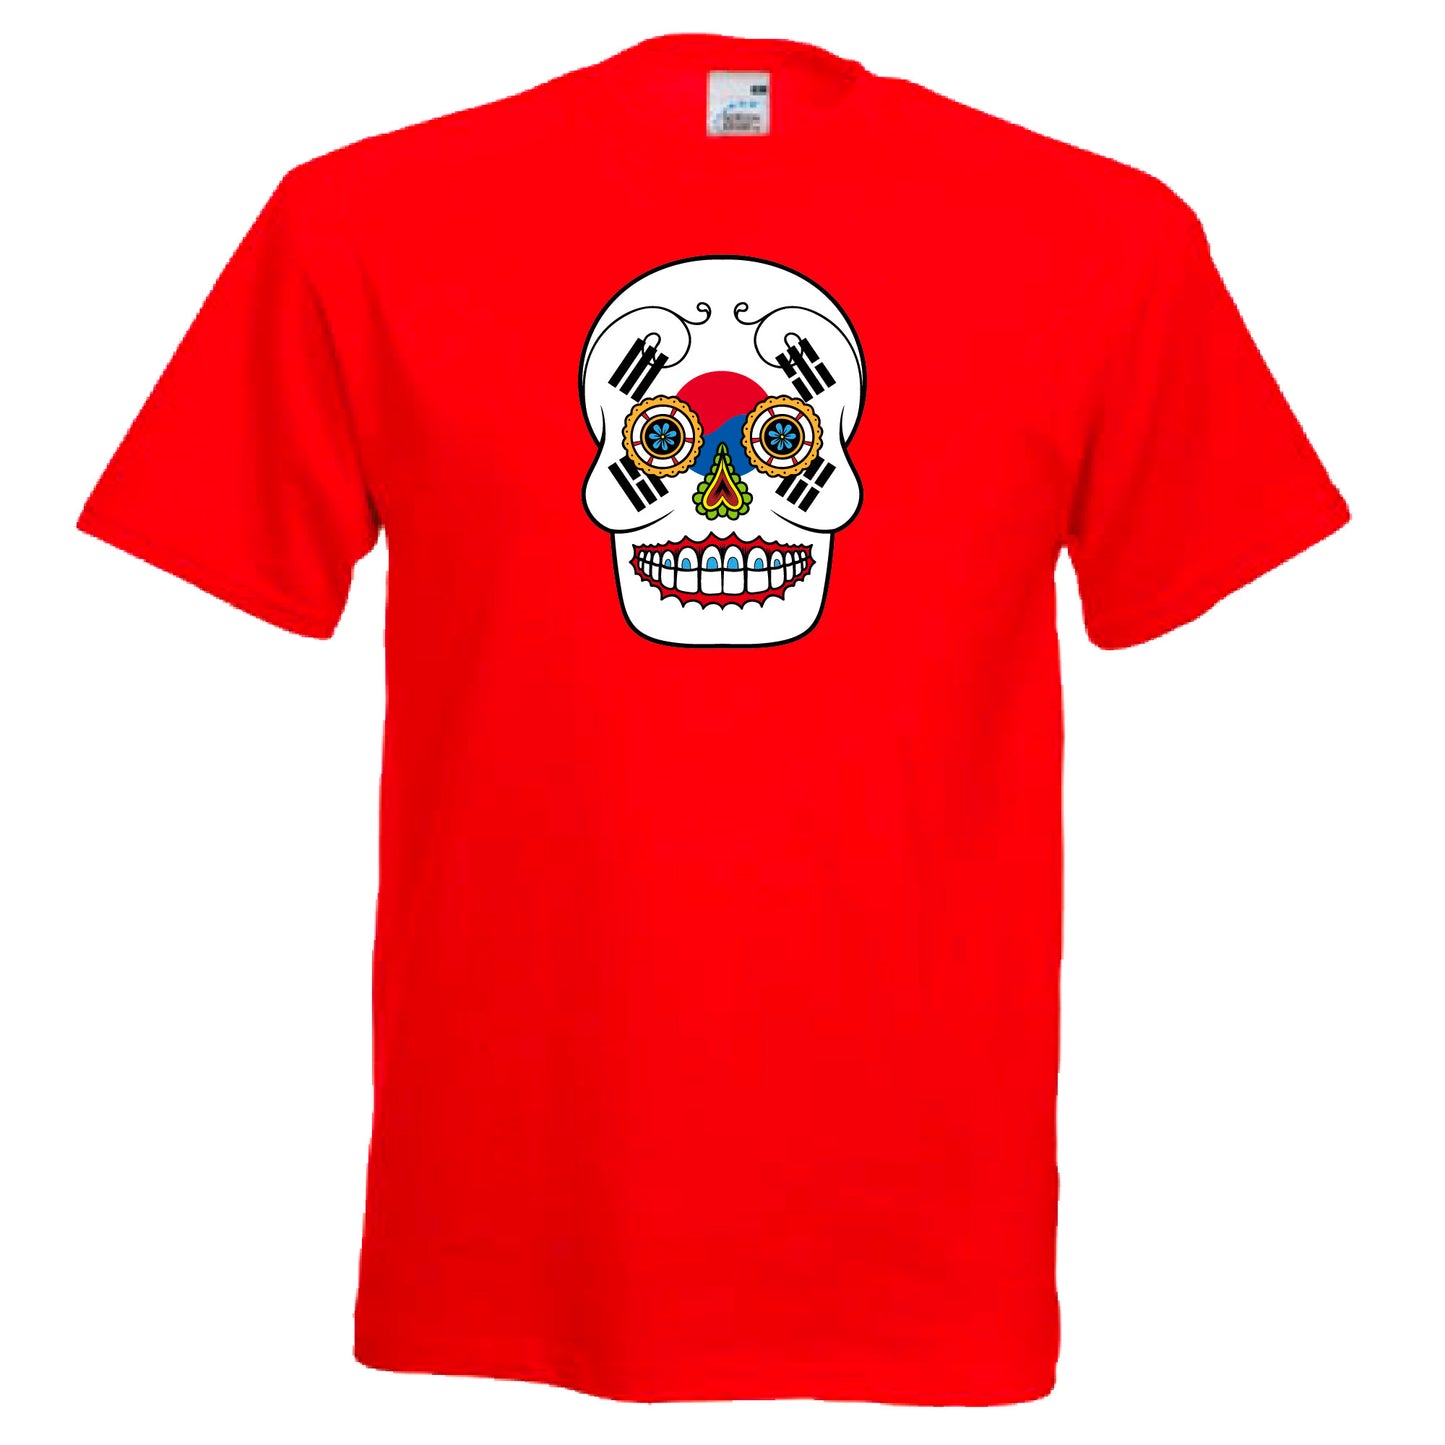 INDIGOS UG - T-Shirt Herren - Südkorea - Skull - Fussball